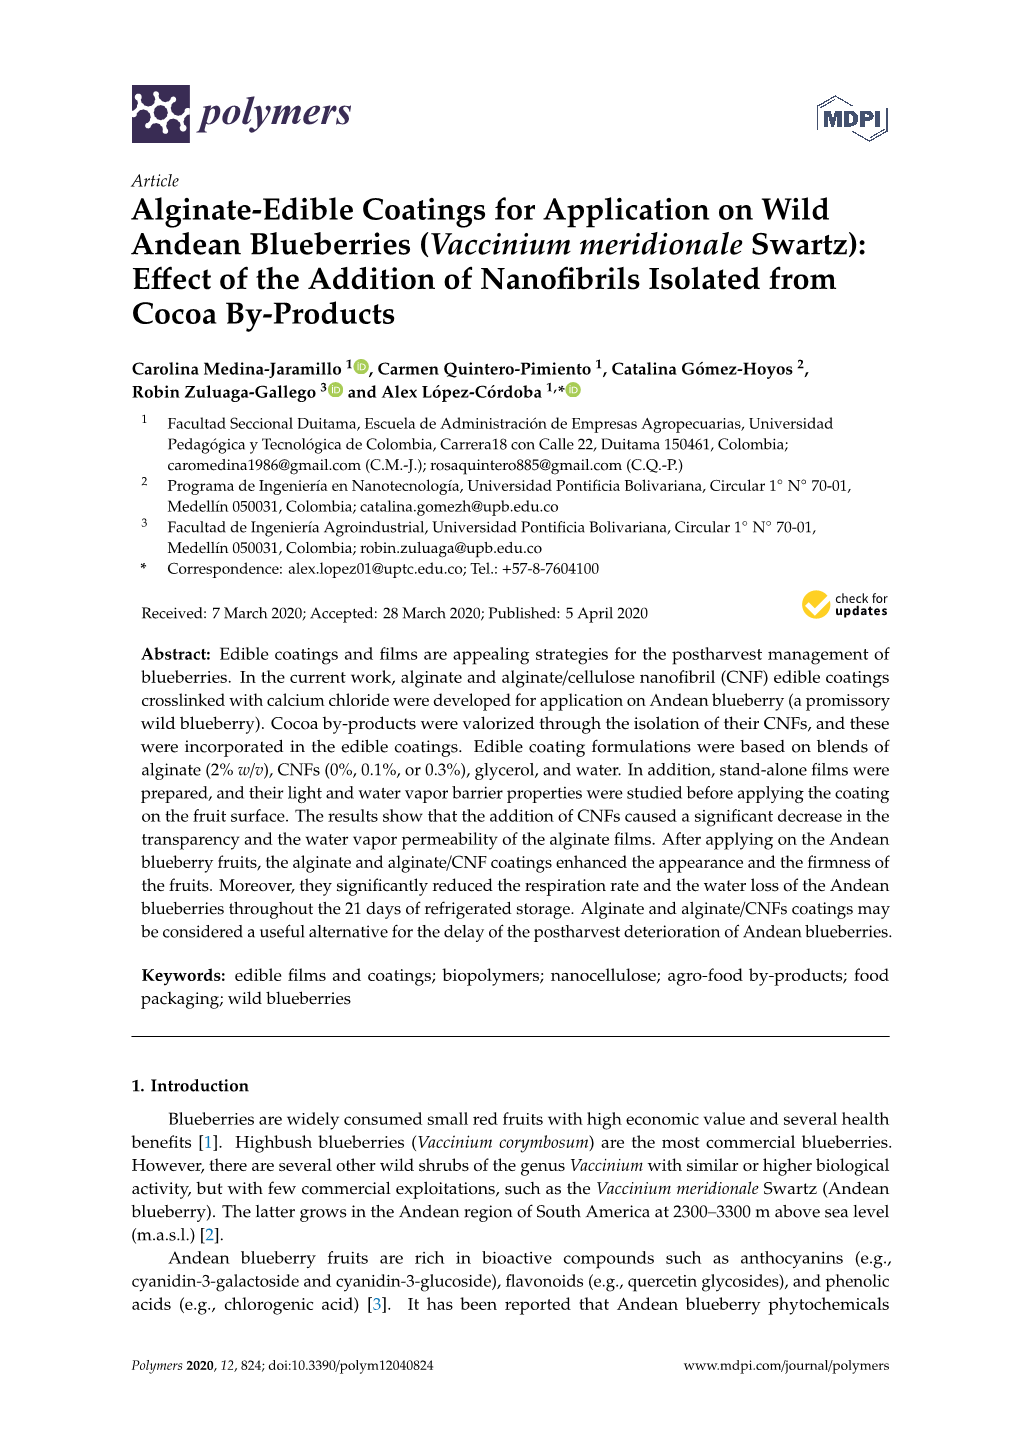 Alginate-Edible Coatings for Application on Wild Andean Blueberries (Vaccinium Meridionale Swartz)